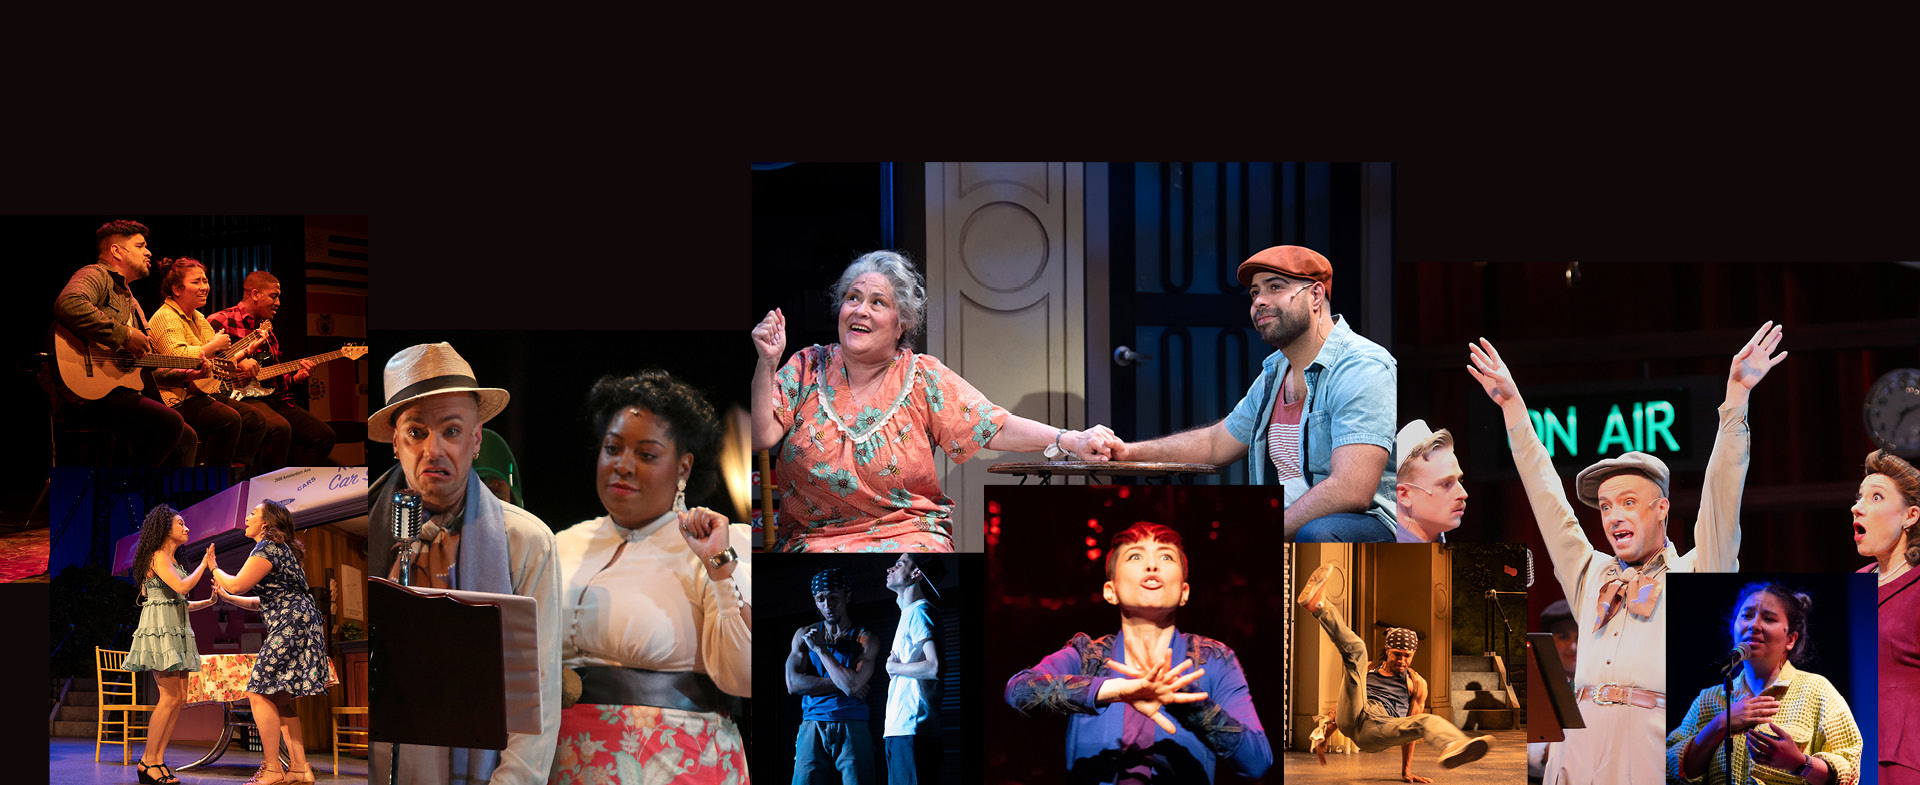 Photo collage of theatre performances